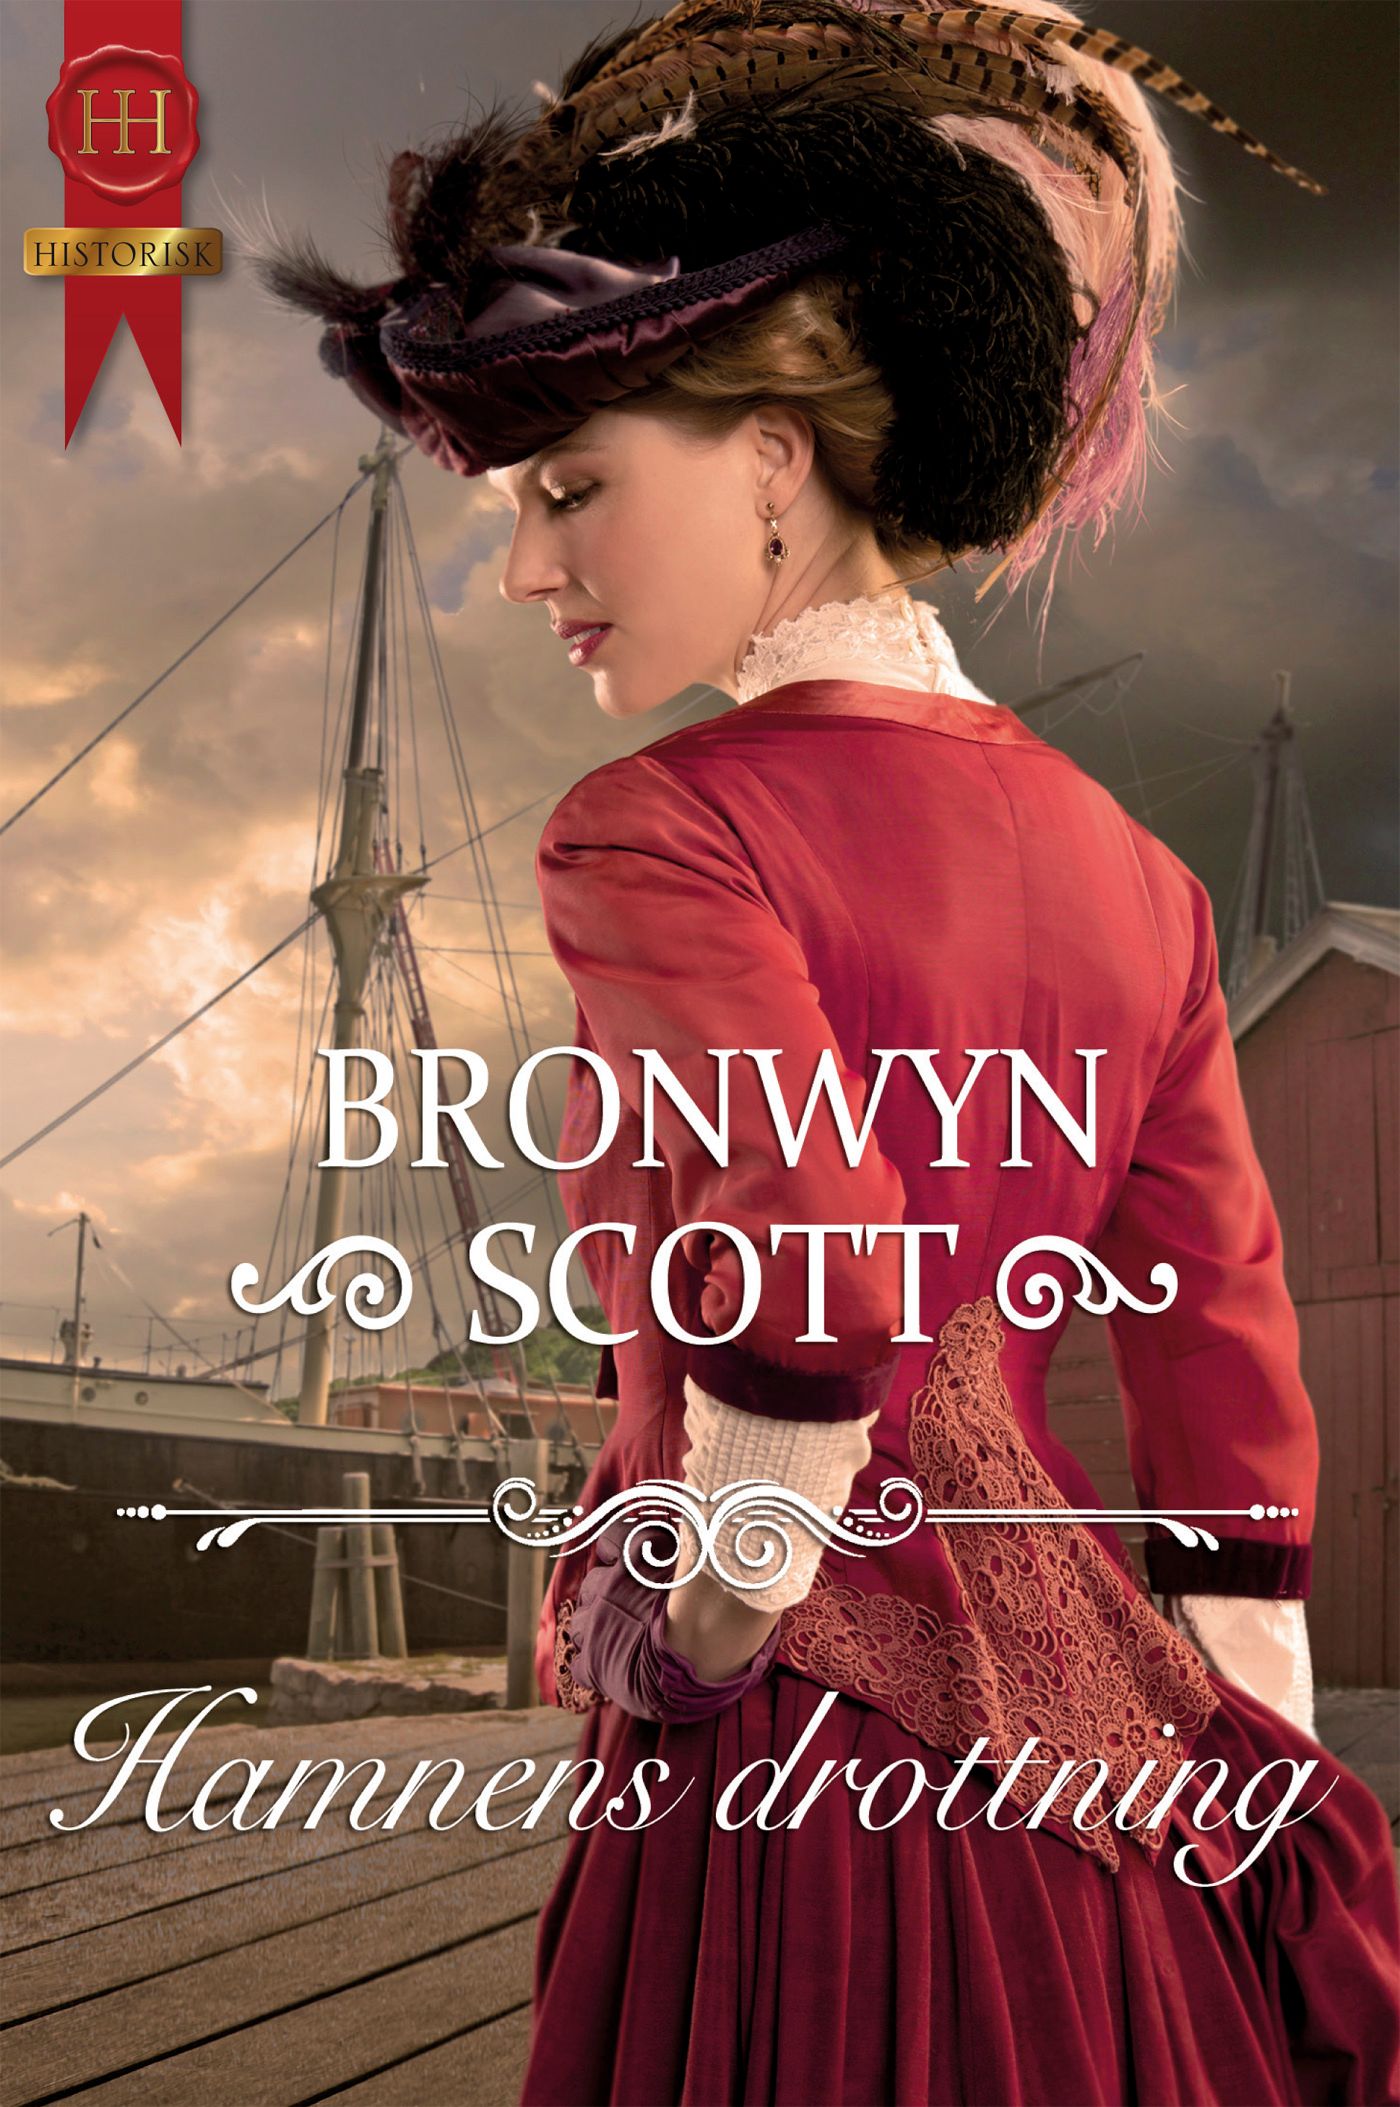 Hamnens drottning, e-bok av Bronwyn Scott